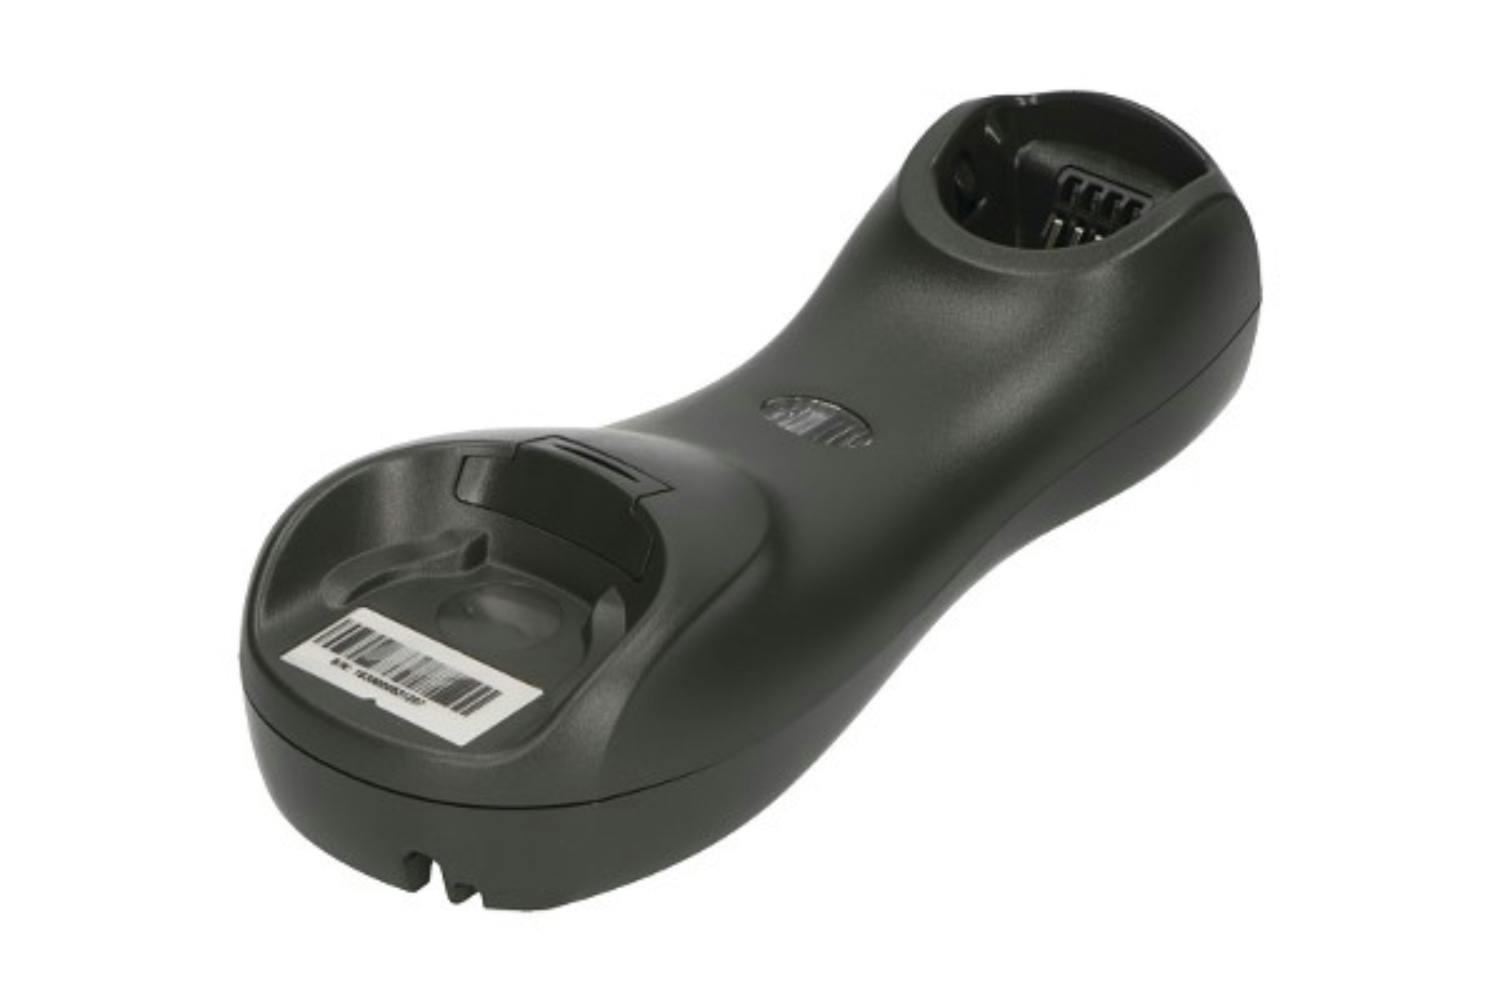 Zebra USB Handheld Scanner with Stand